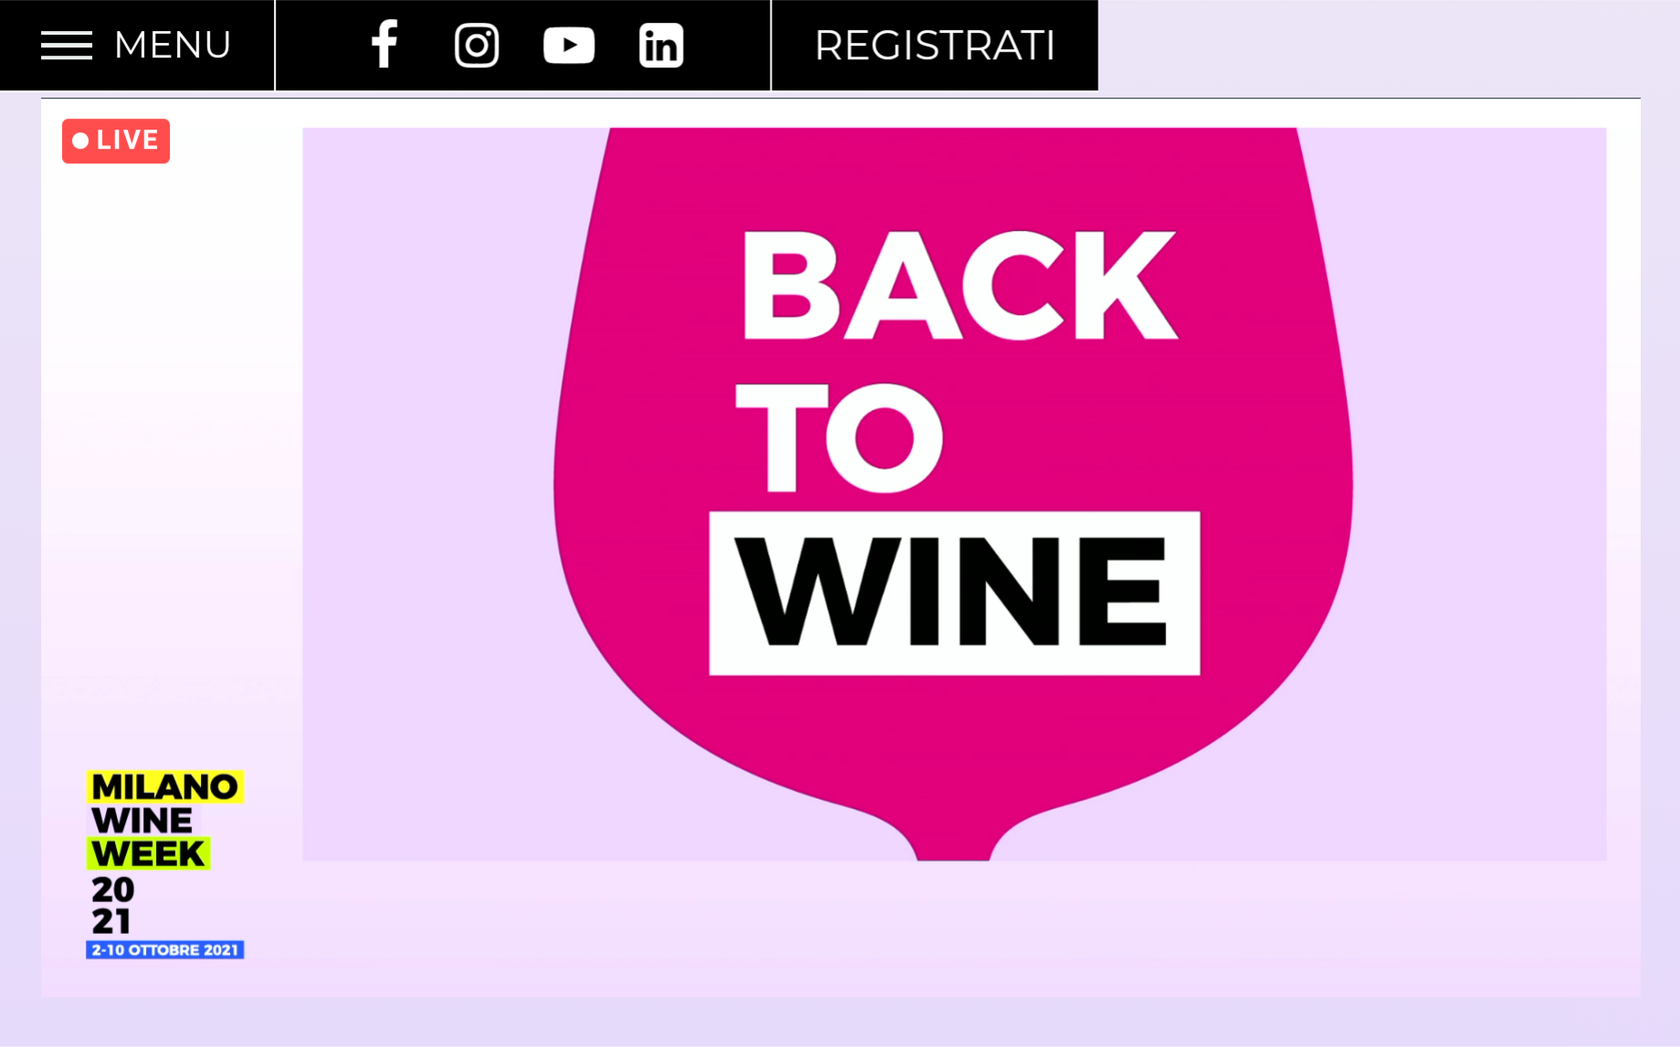 Back to Wine Milano Wine Week 2021